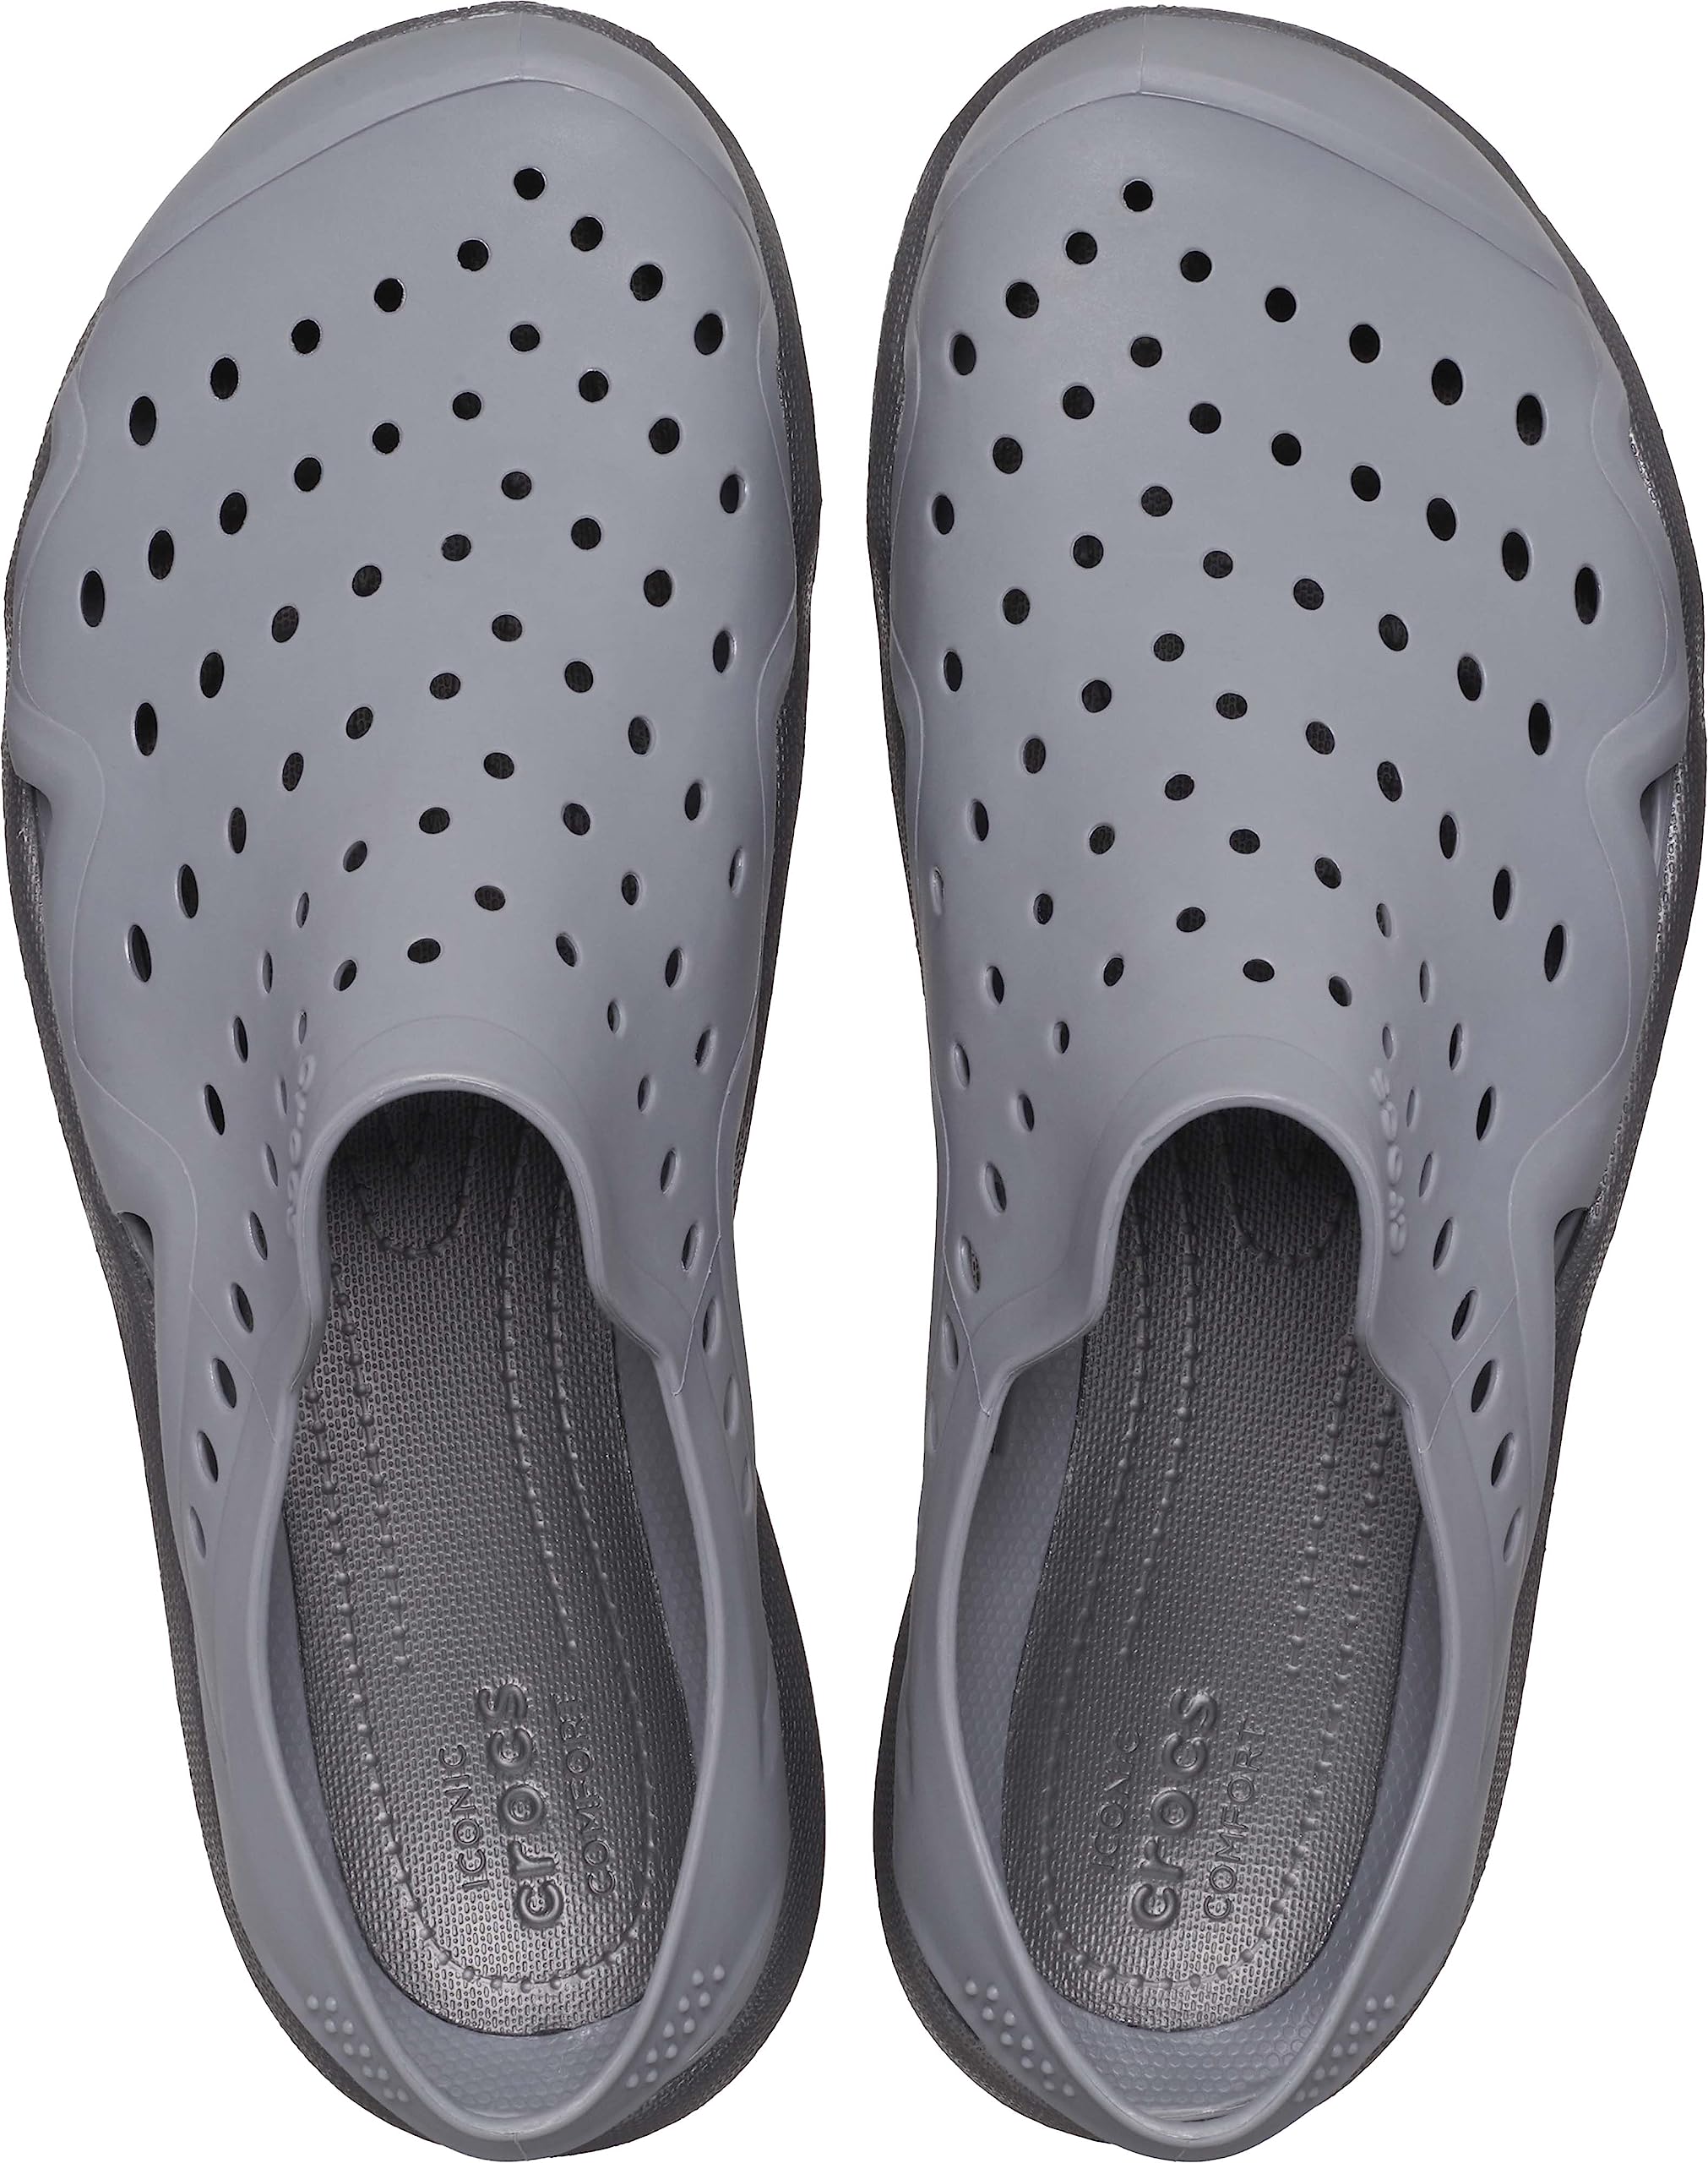 Crocs Men's Swiftwater Wave Sandals, Water Shoes, Charcoal/Graphite, 9 Men